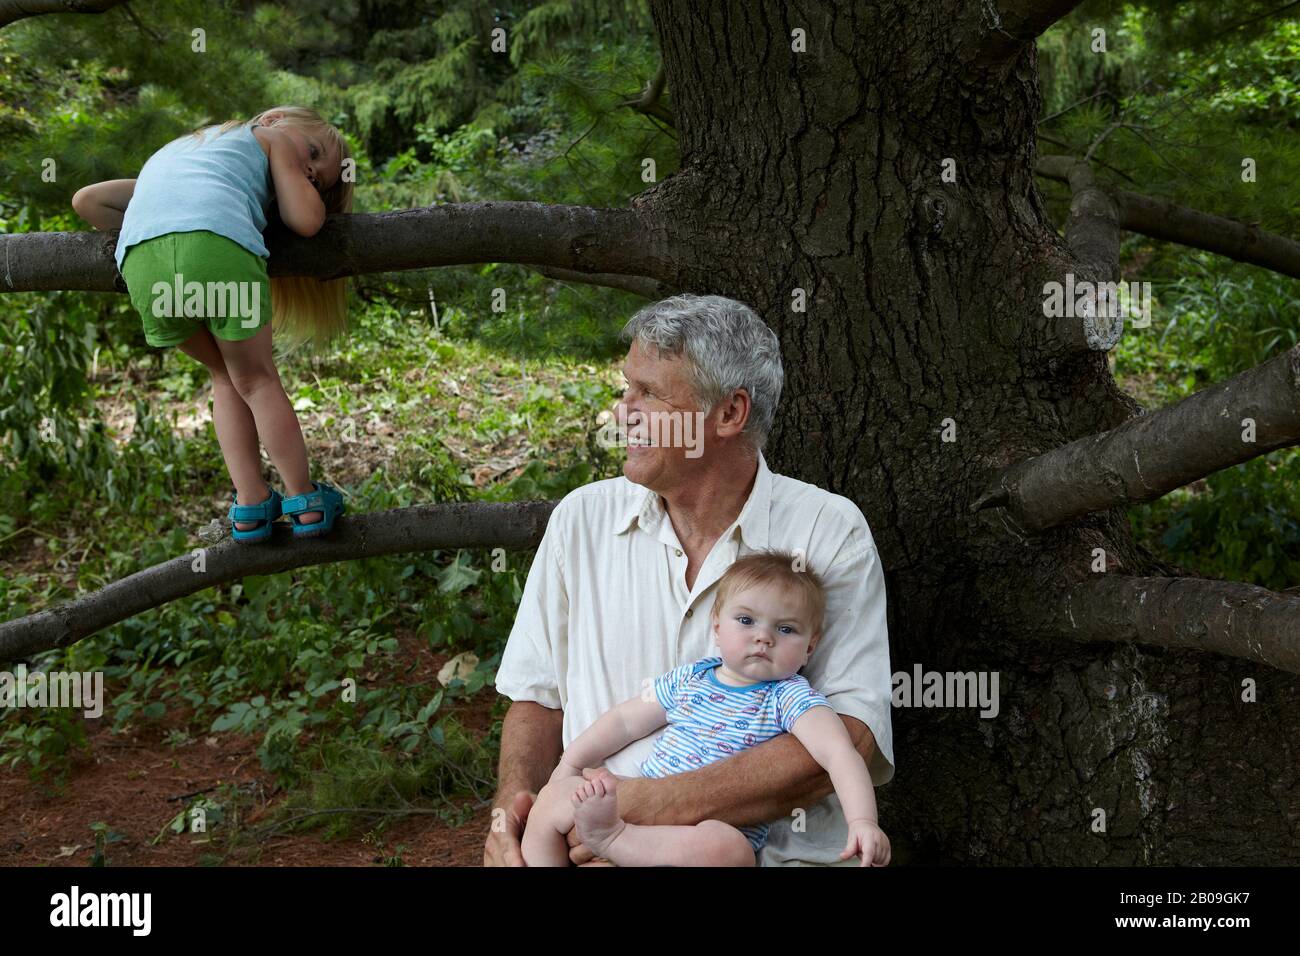 girl climbing tree Stock Photo